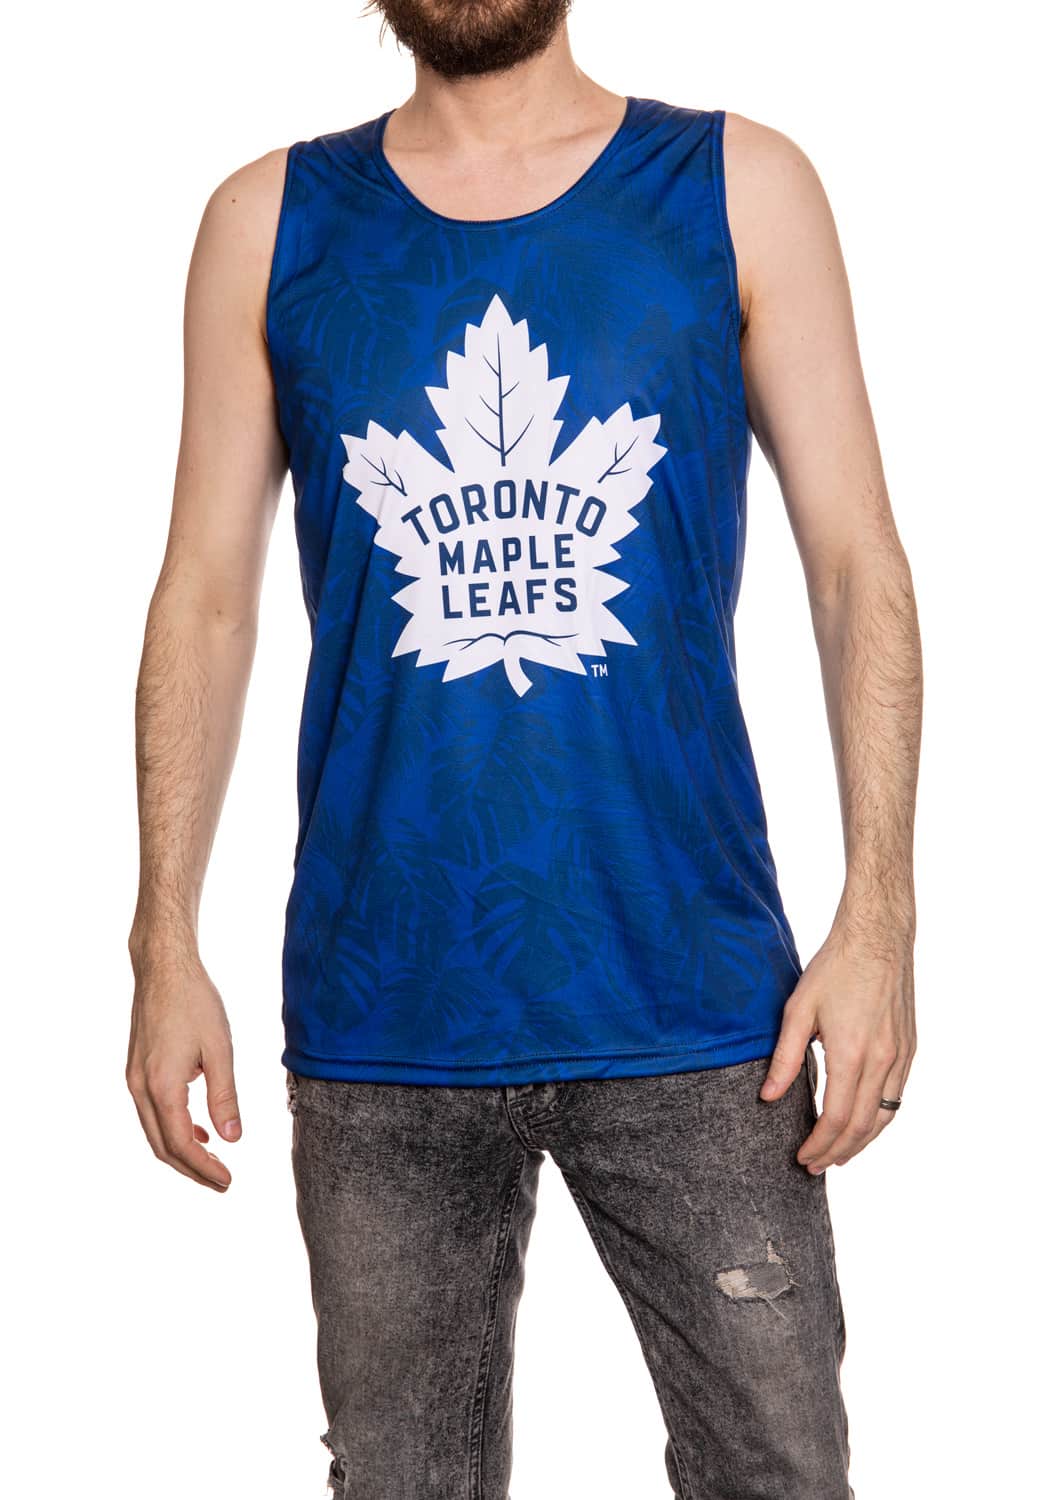 Toronto Maple Leafs "Palm" Tank Top